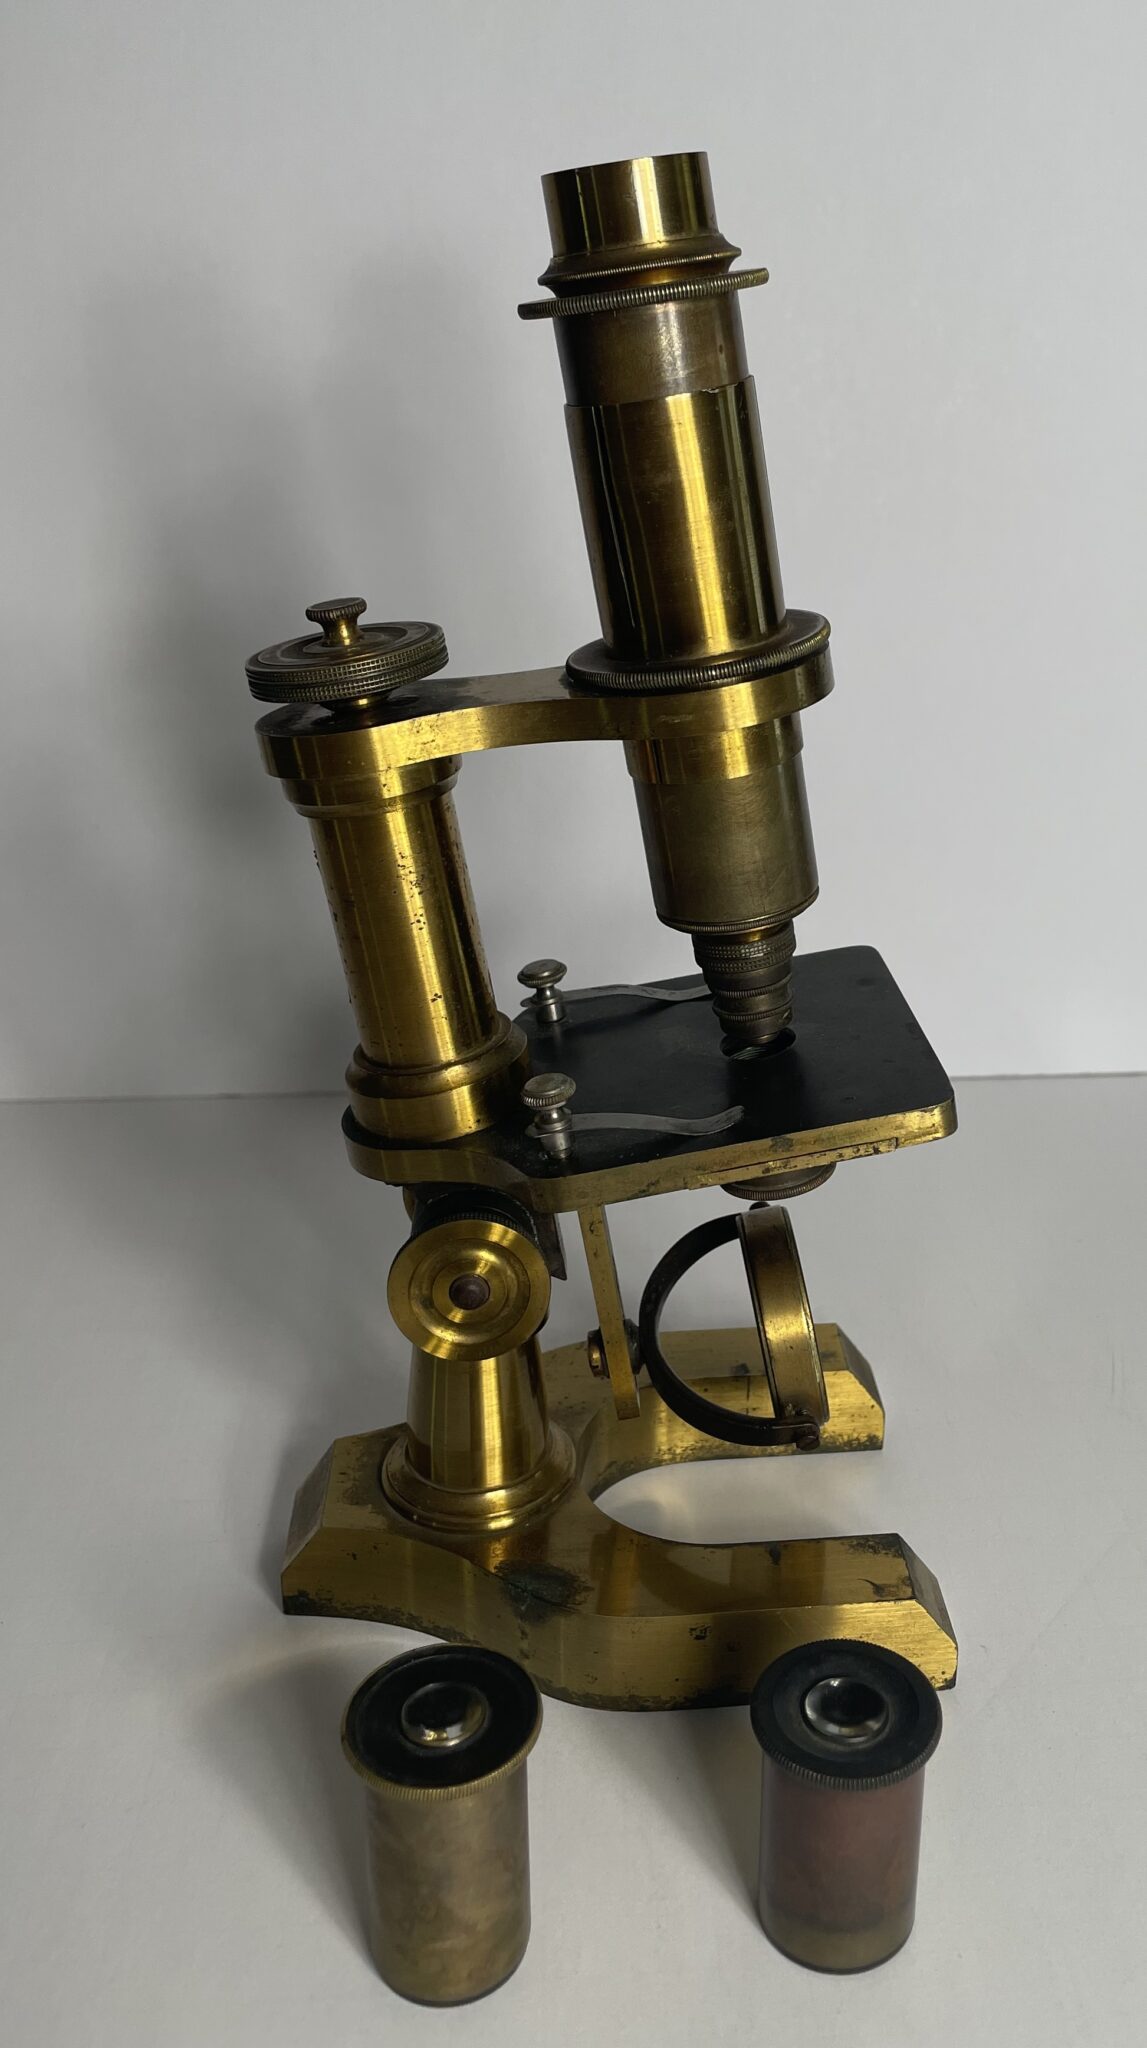 Signed Rudolf Wasserlein, Berlin Stativ 1A Microscope C 1870